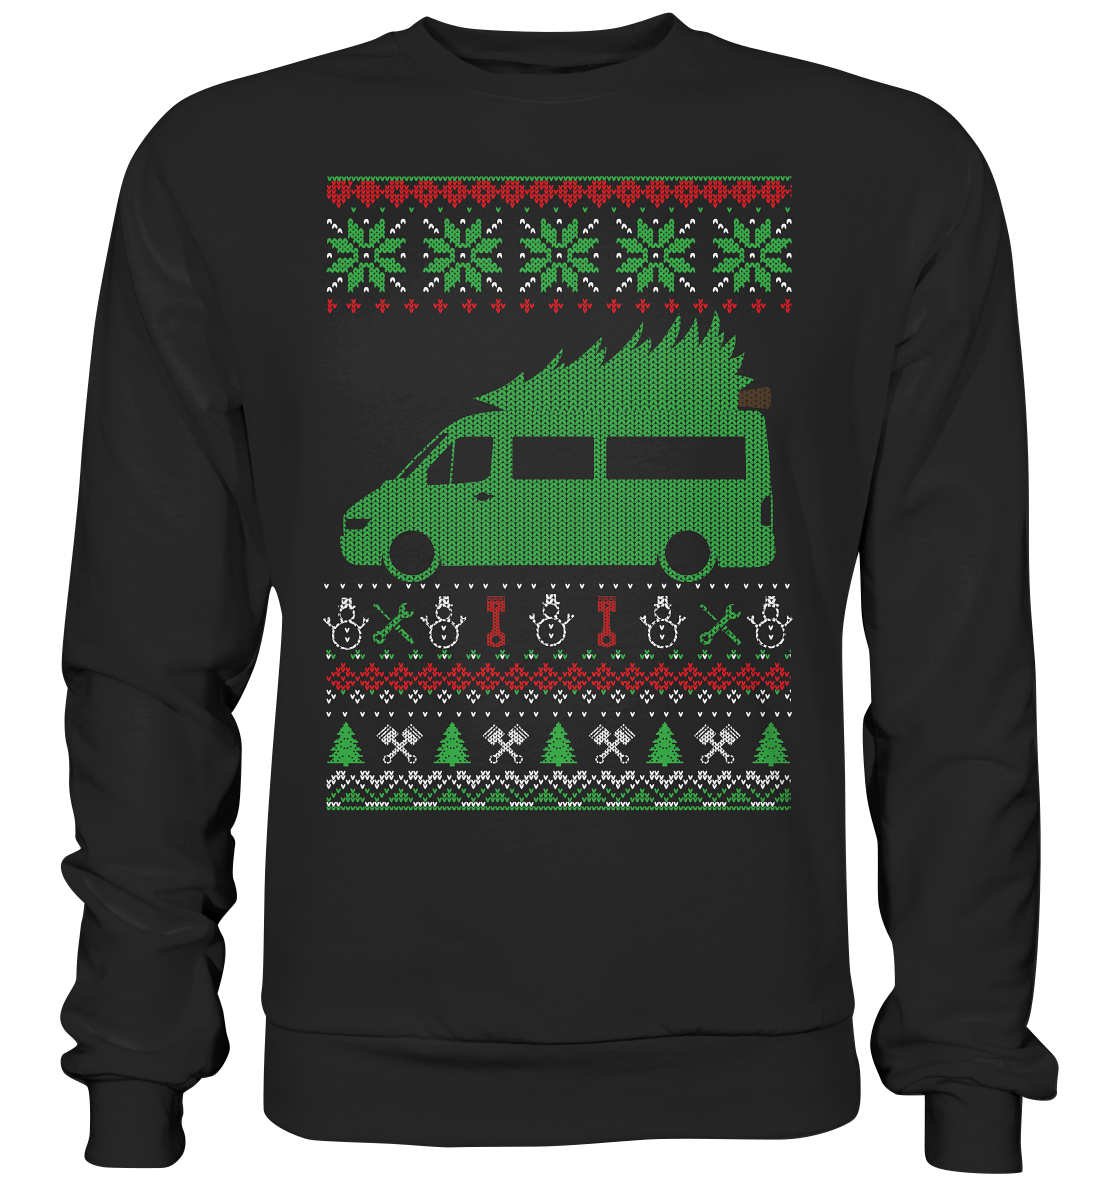 CODUGLY_MGKW901B - Premium Sweatshirt